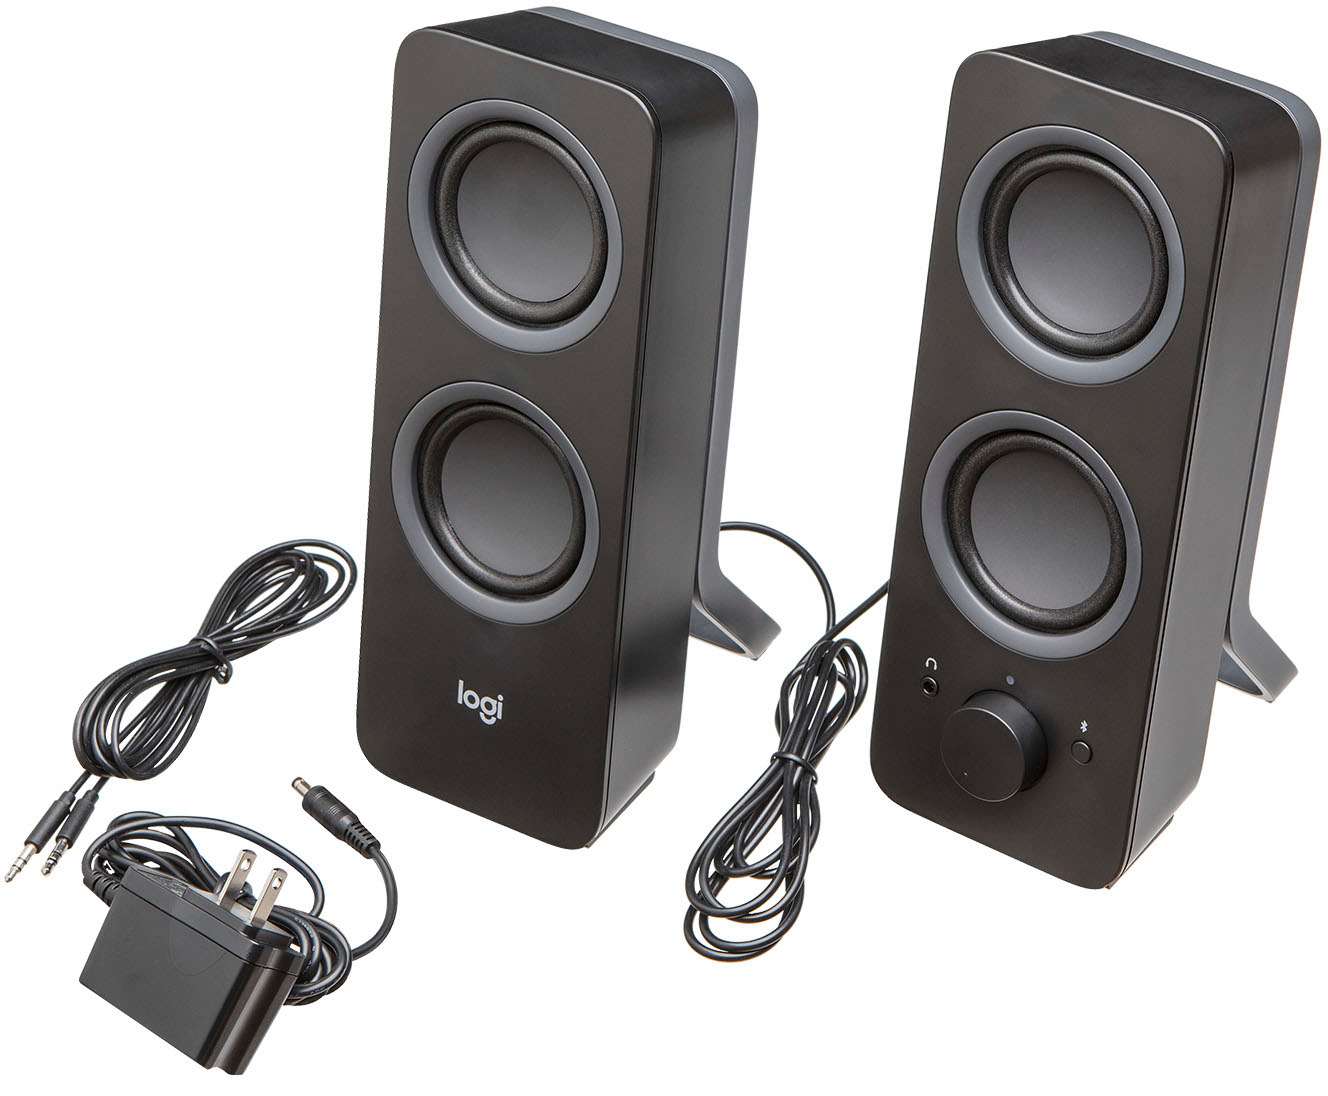 Logitech Z407 2.1 Bluetooth Computer Speaker System with Wireless Control  (3-Piece) Black 980-001347 - Best Buy